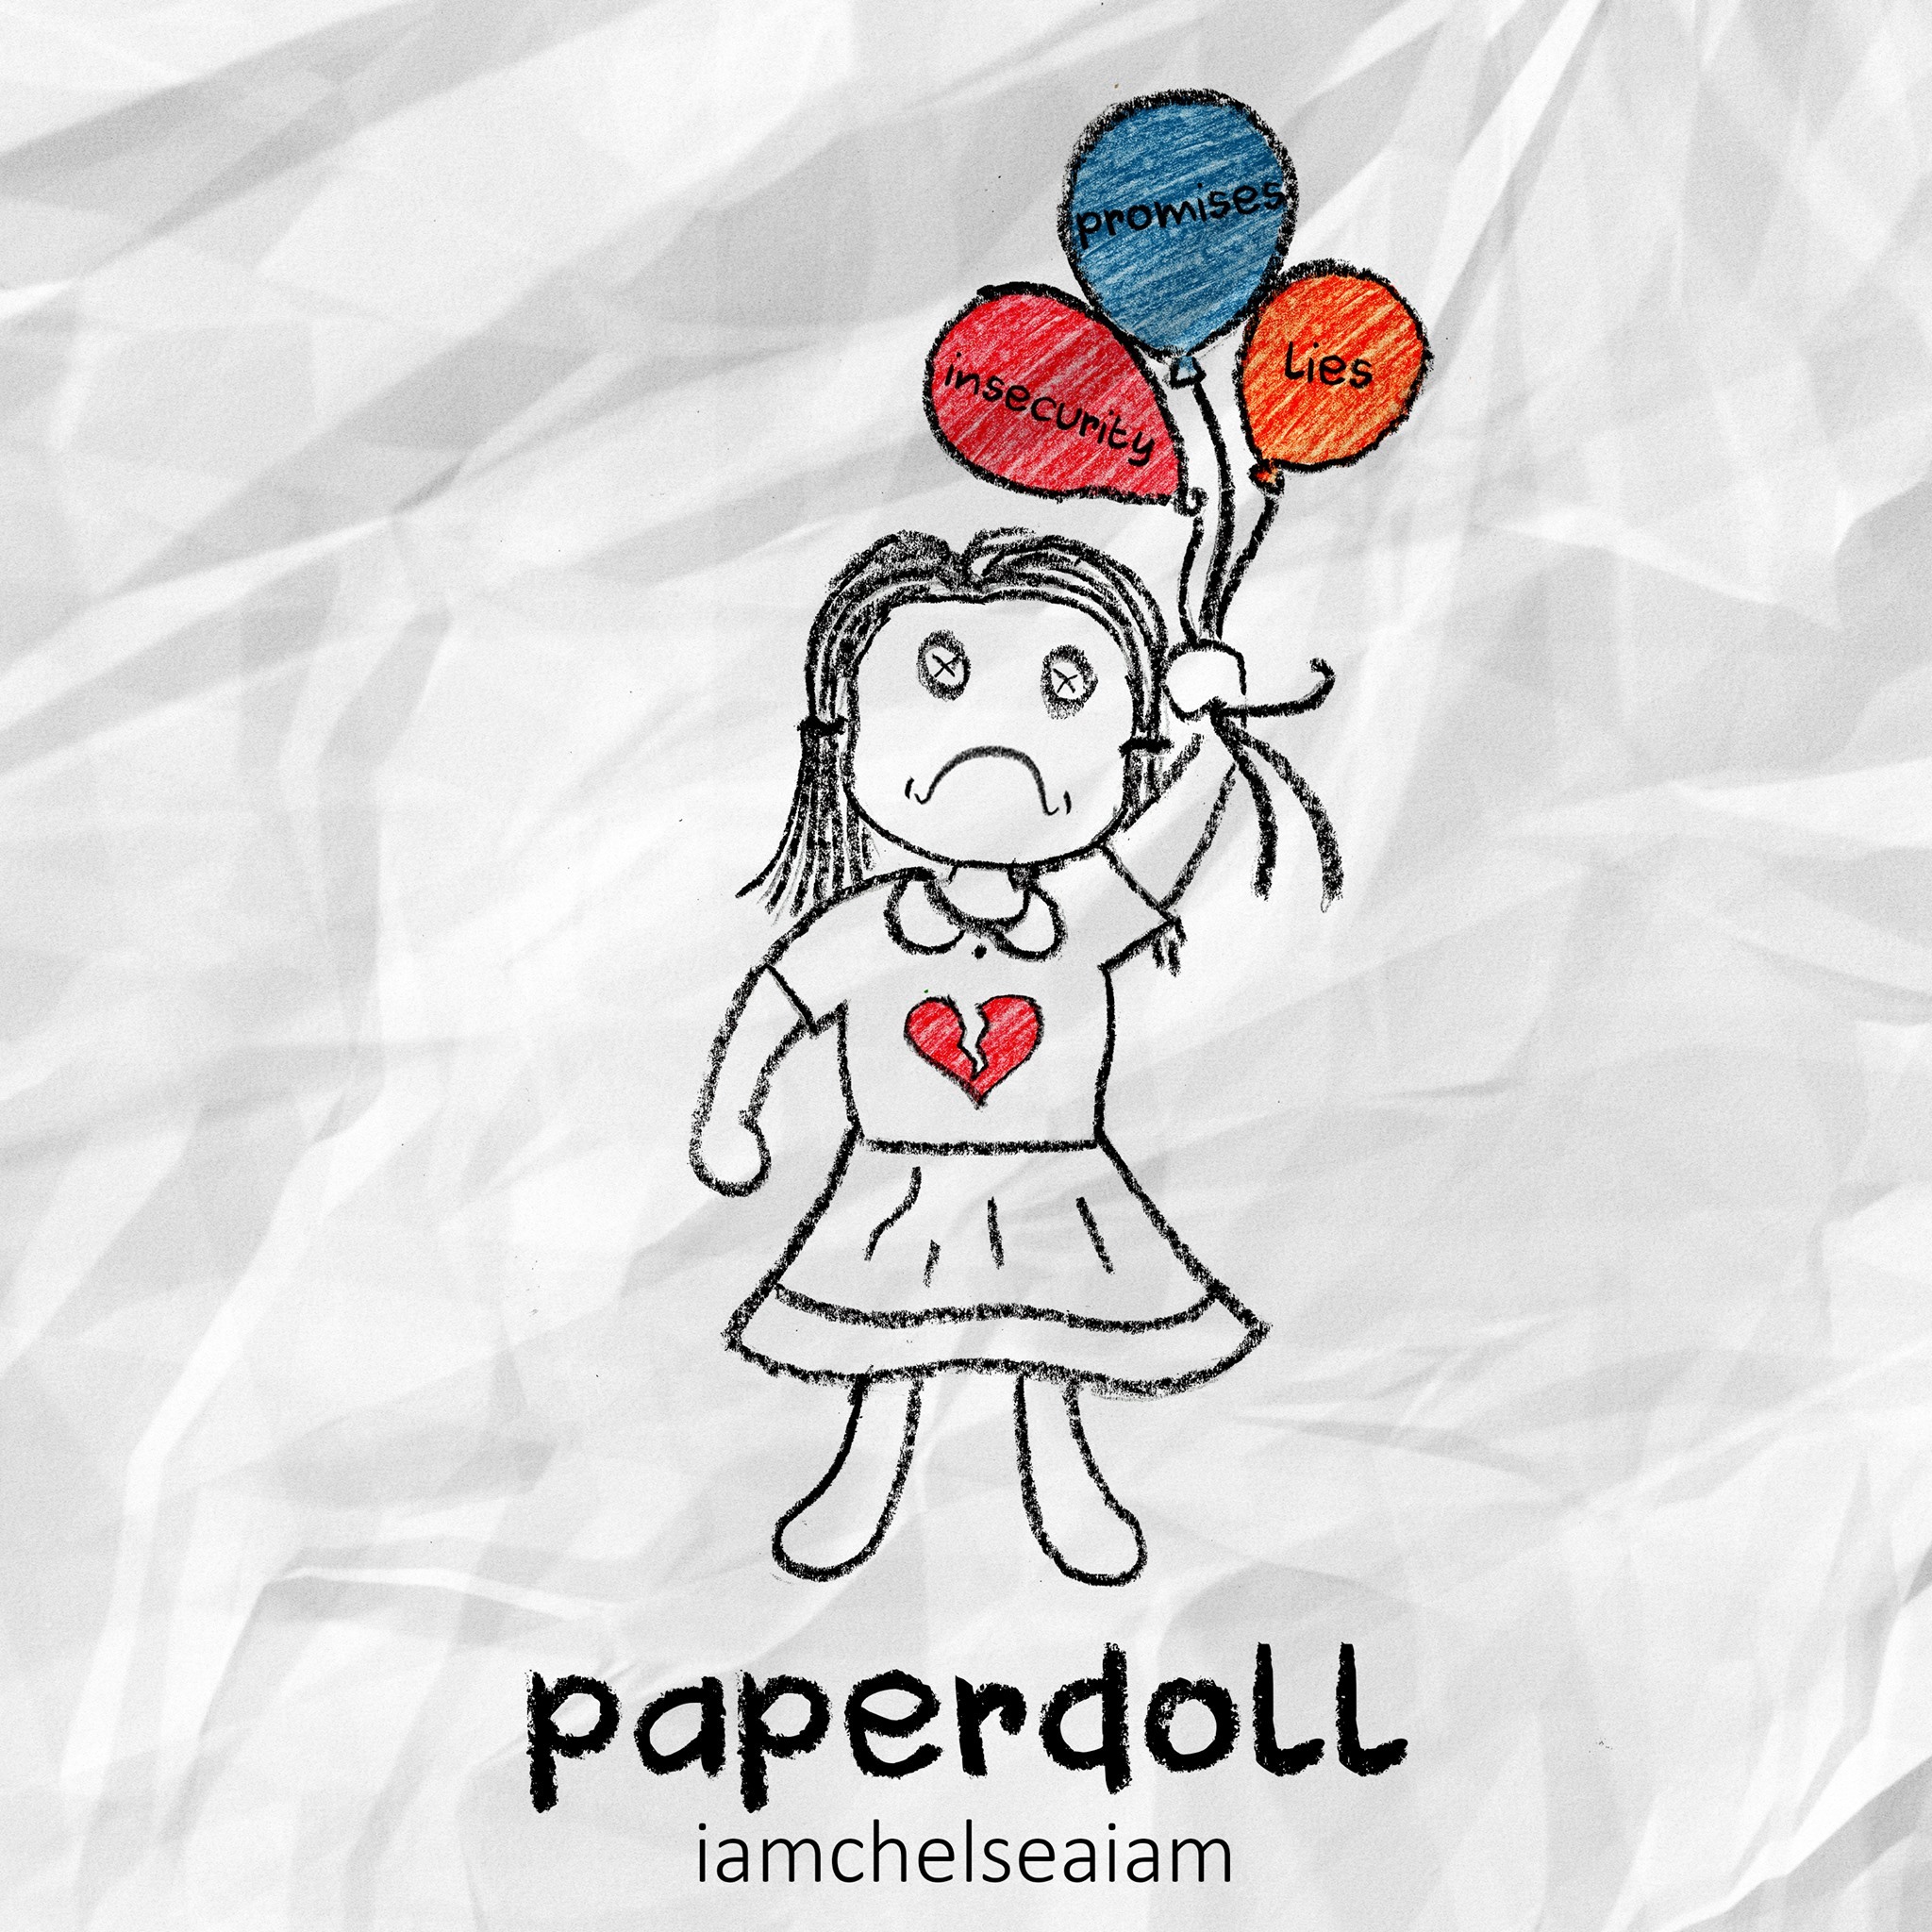 New Music: IAmChelseaIAm - PaperDoll